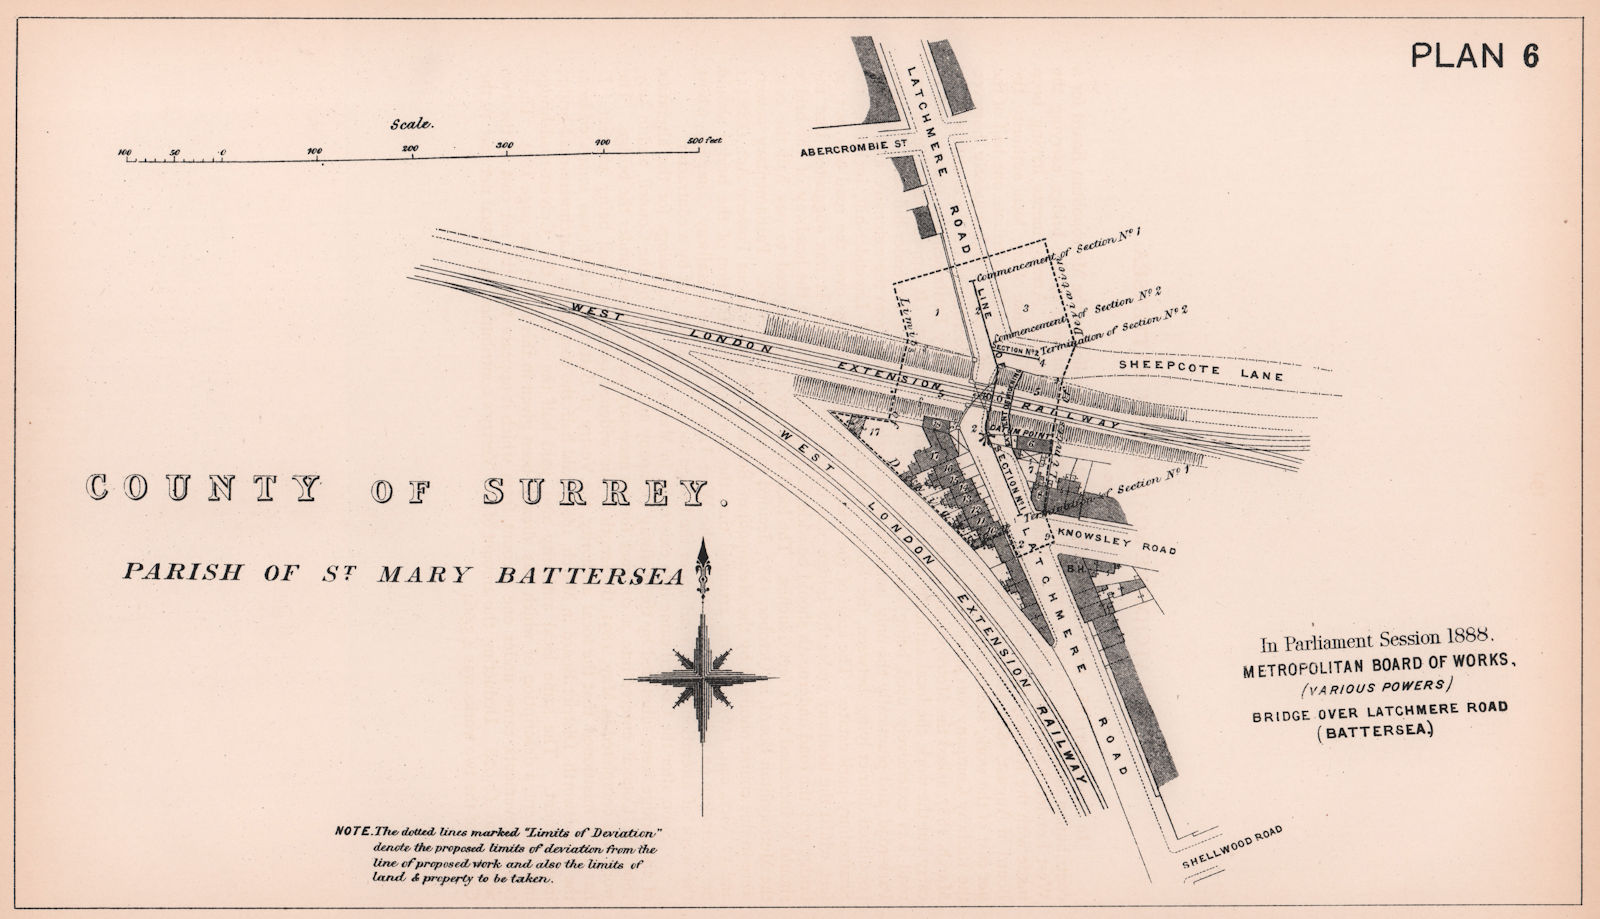 1888 Latchmere Road (Battersea) railway bridge plan. Abercrombie St. 1898 map